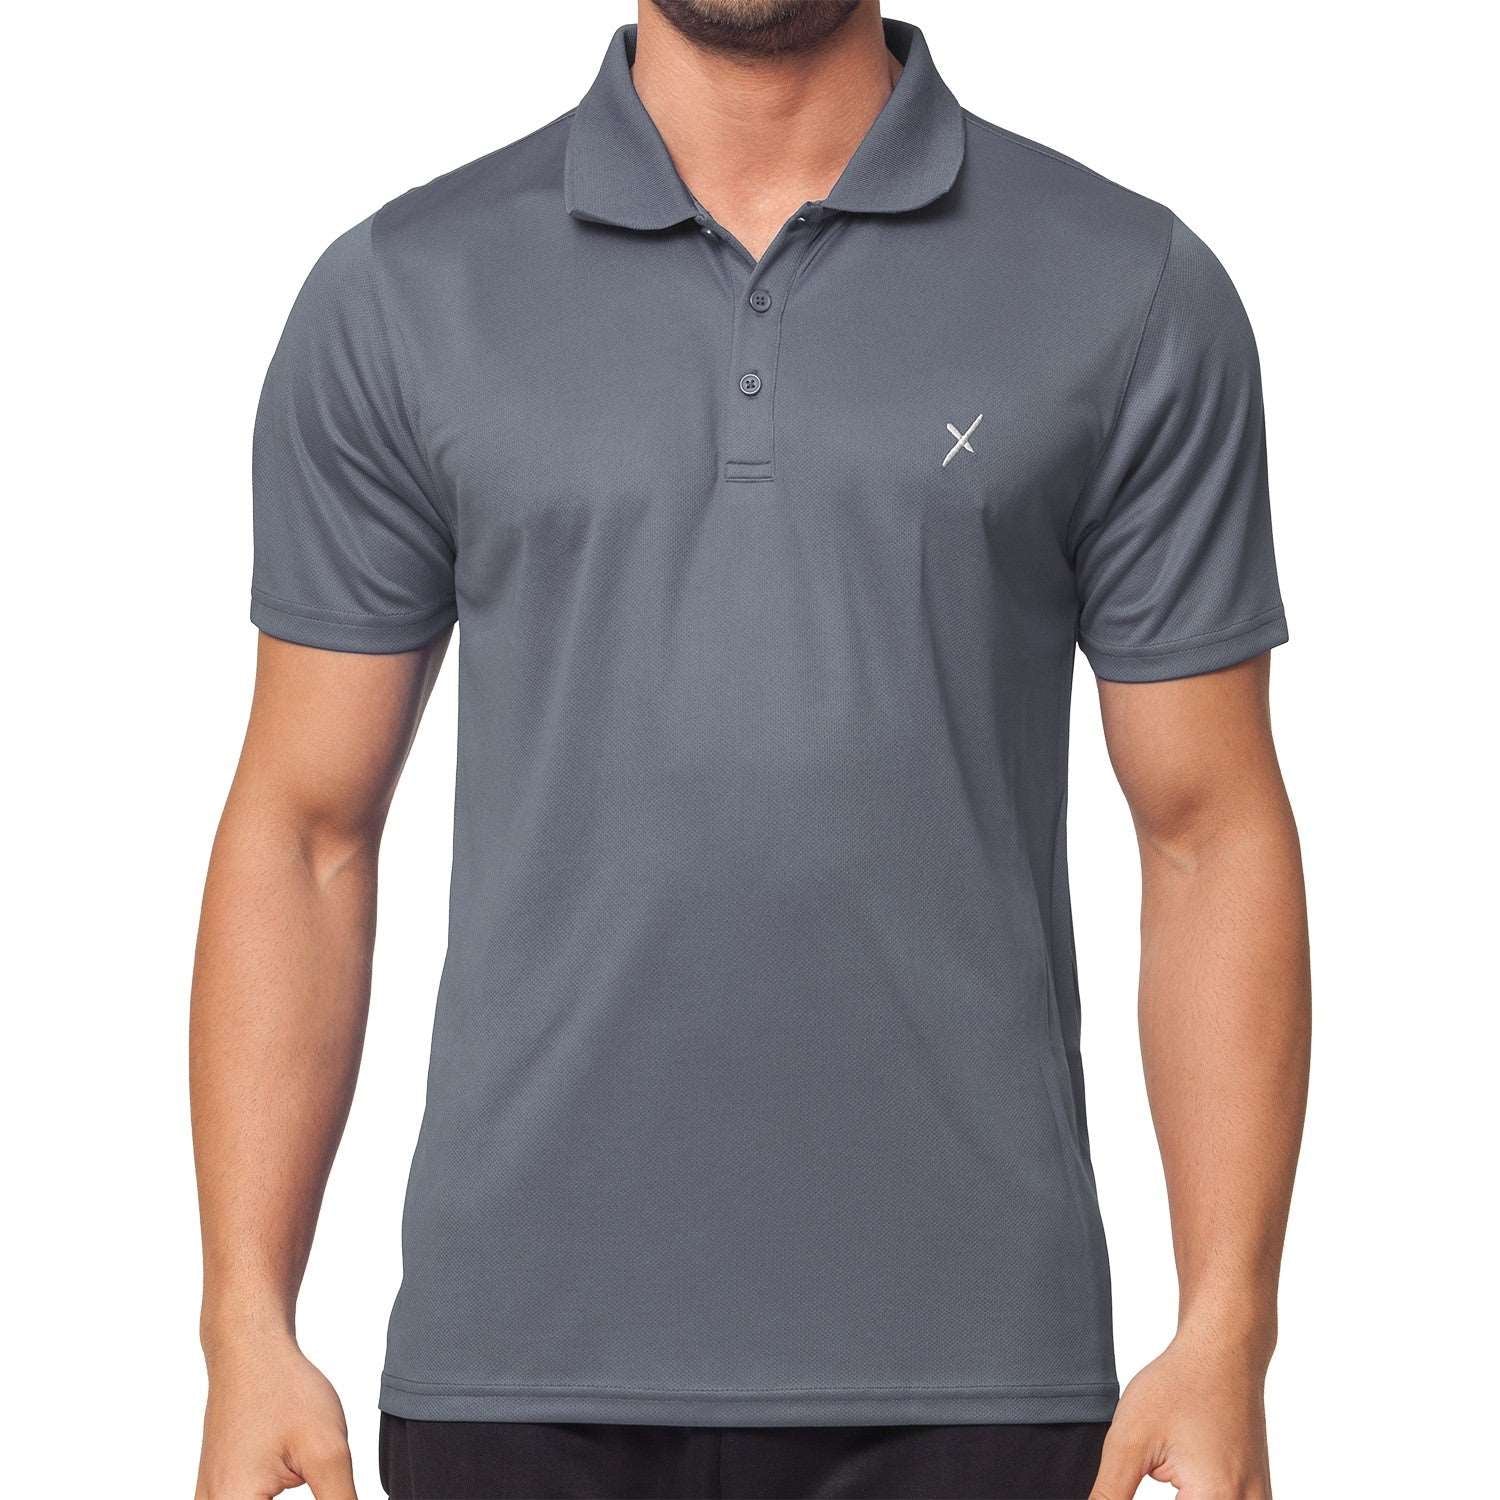 Cflex Activewear half sleeve Polo shirt-MPLO-2001-Grey - FactoryX.pk